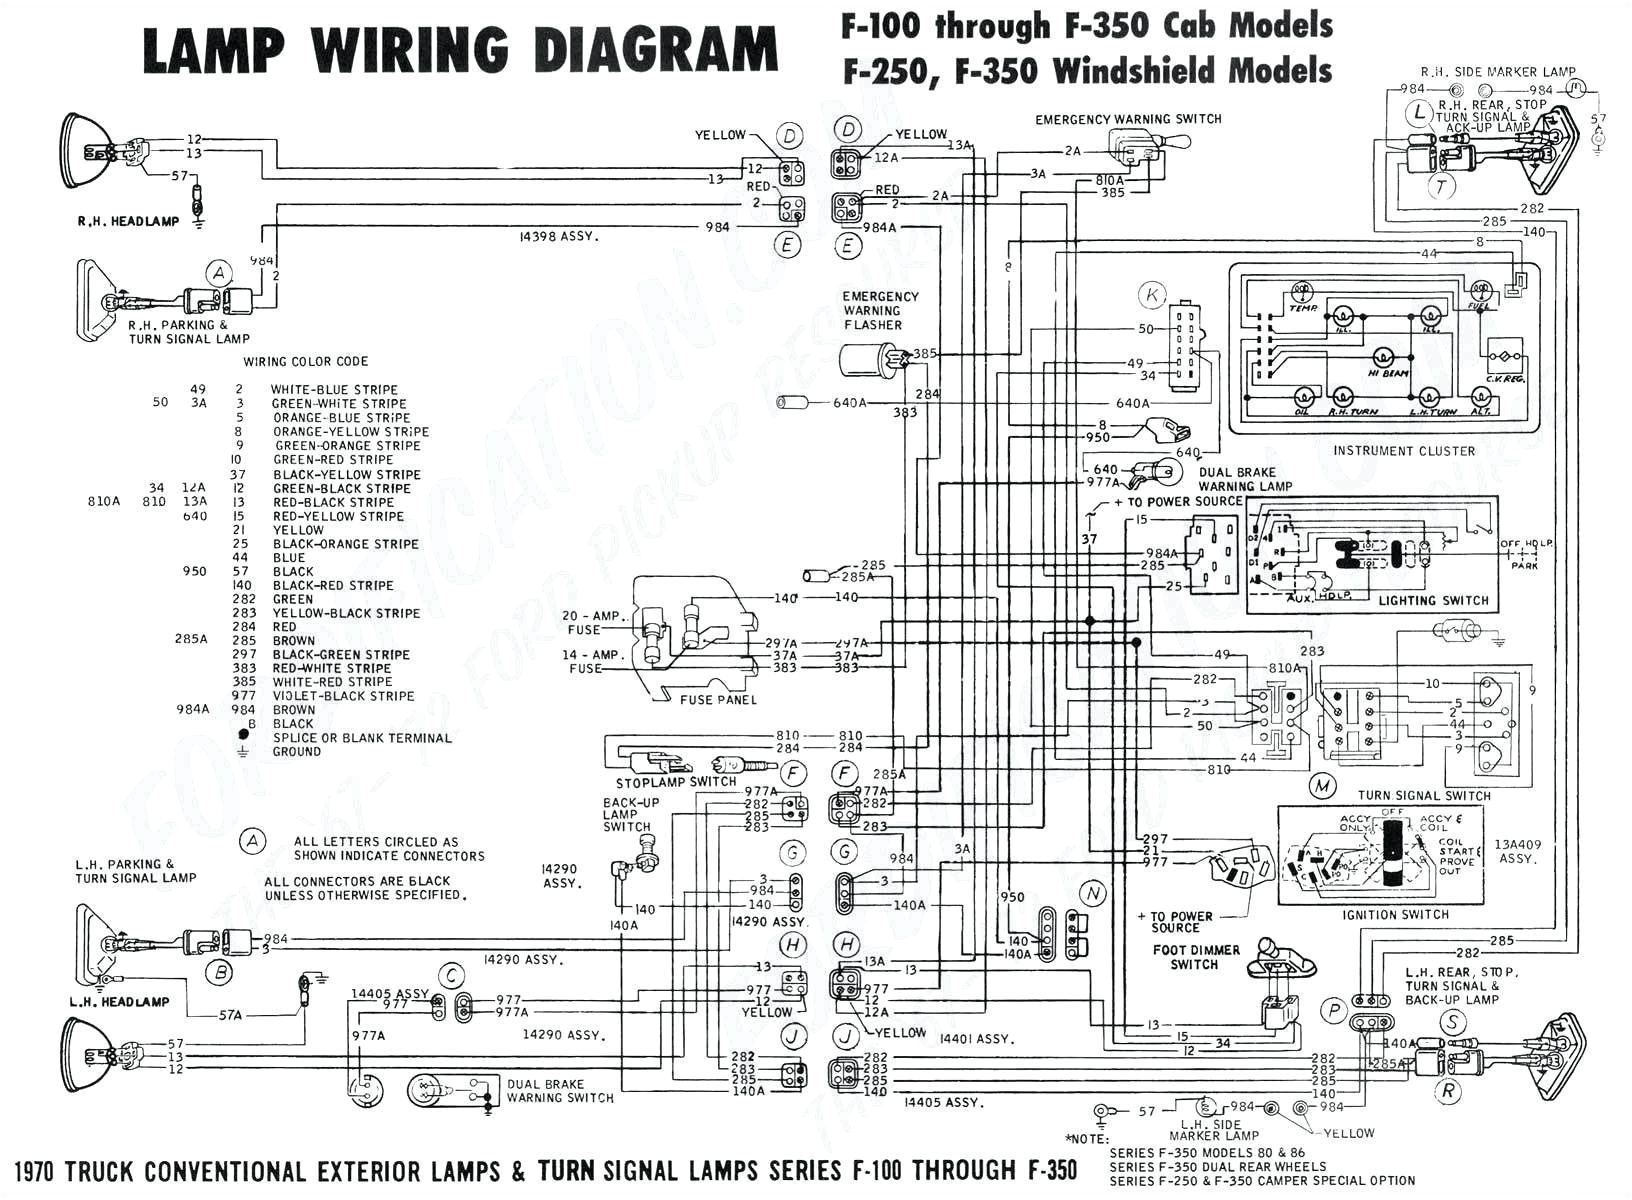 1991 nissan pickup headlight wiring diagram wire diagram database toyota 1991 headlight wiring